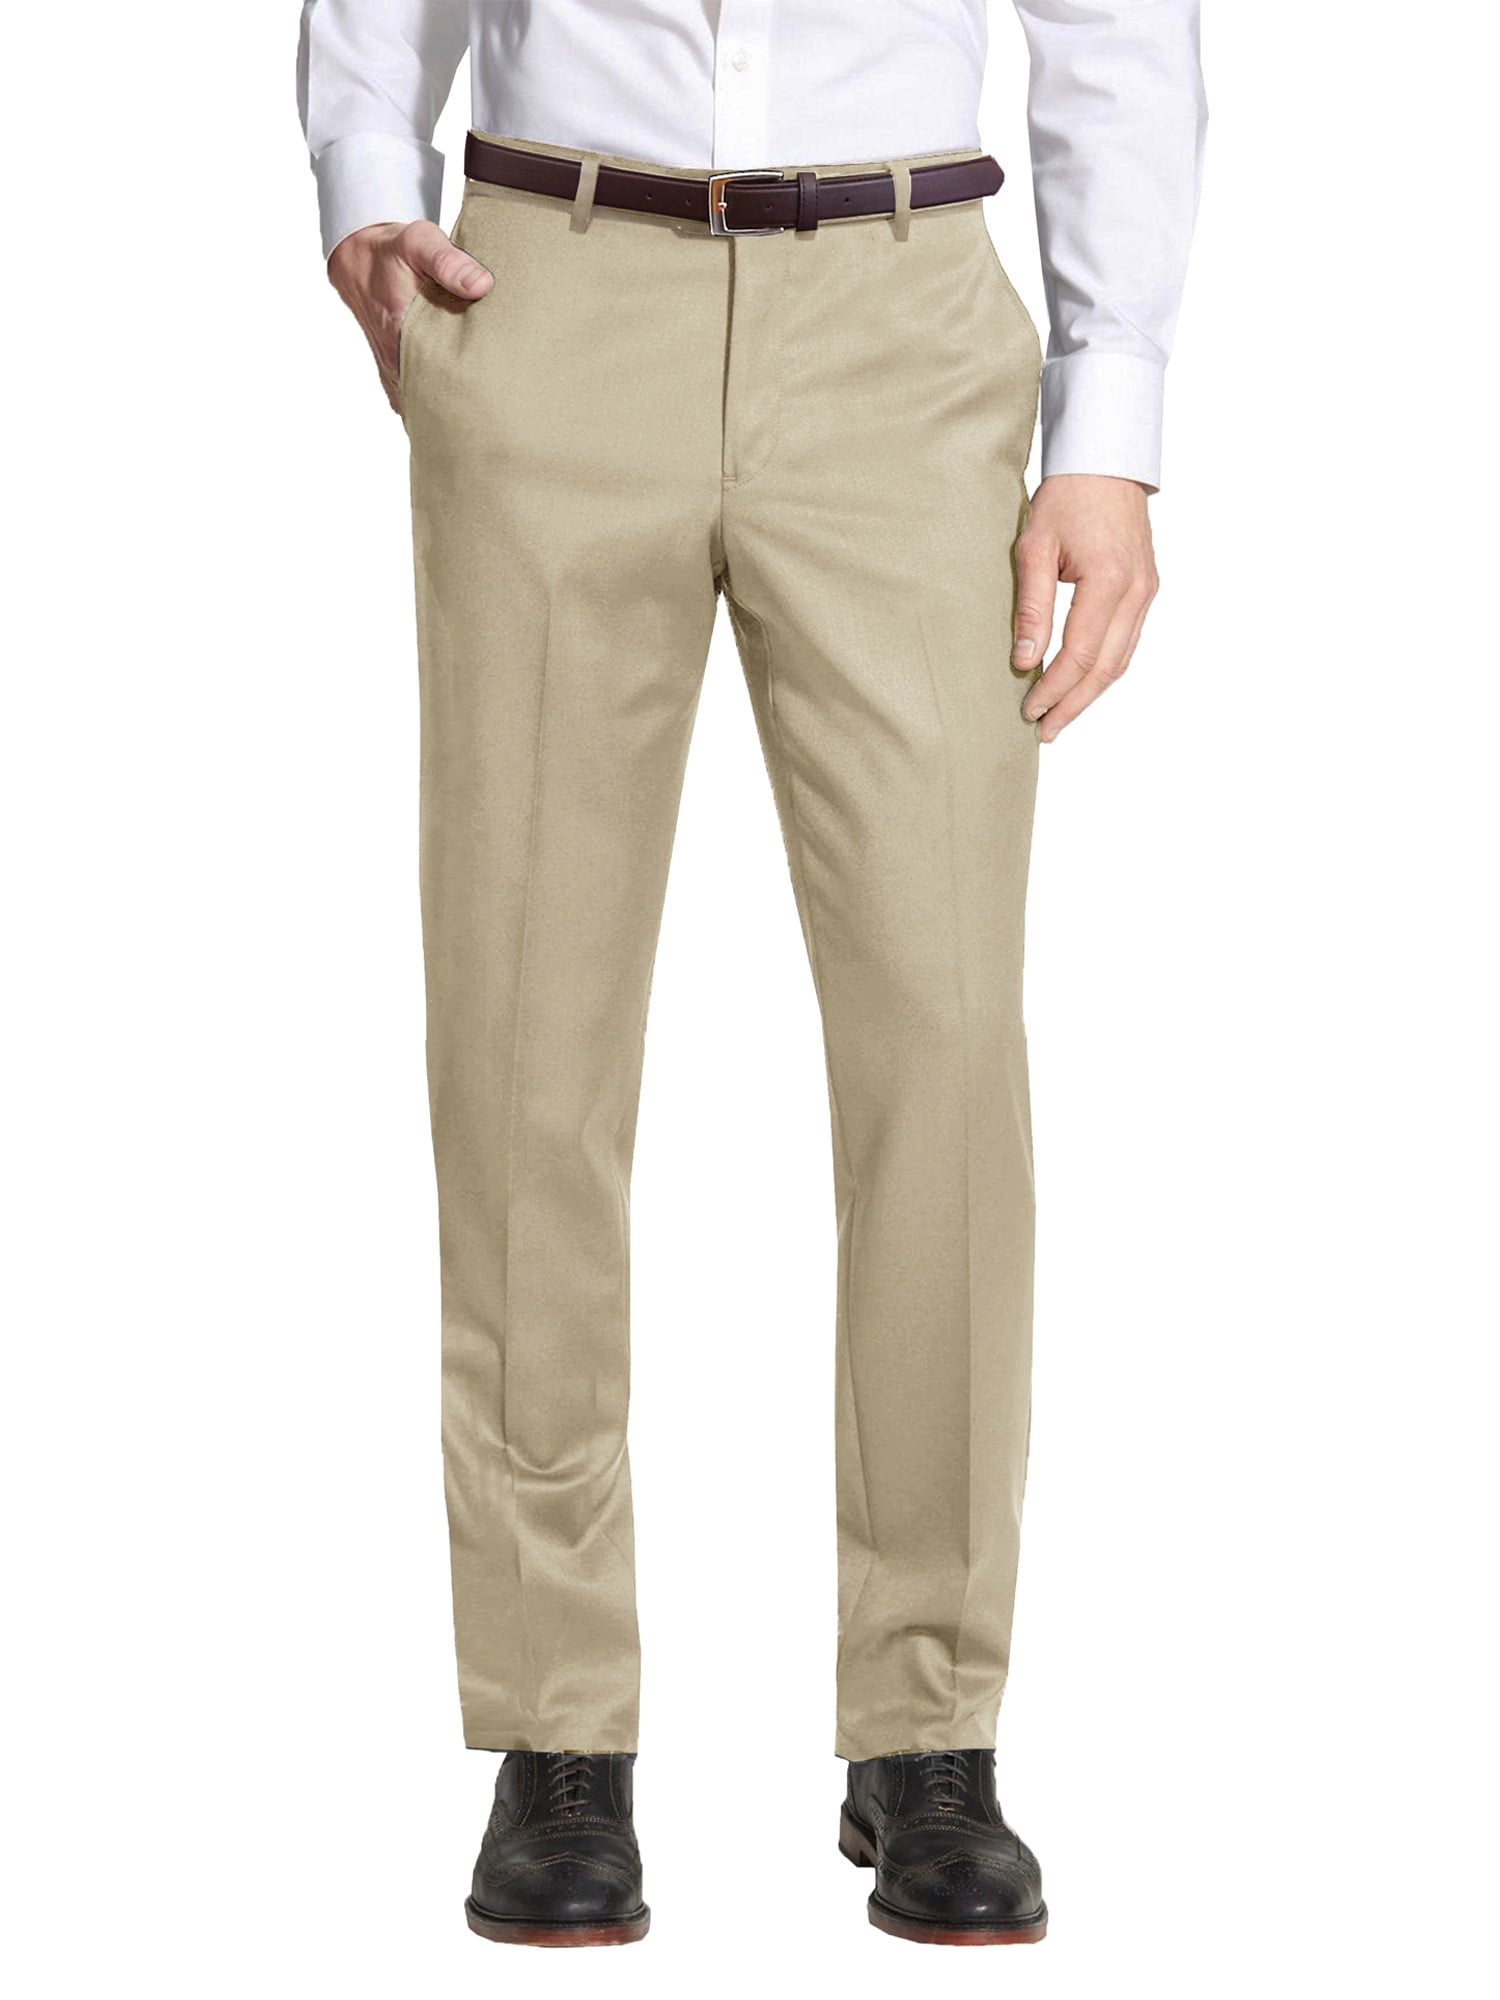 Men’s Slim-Fit Belted Casual Dress Pants